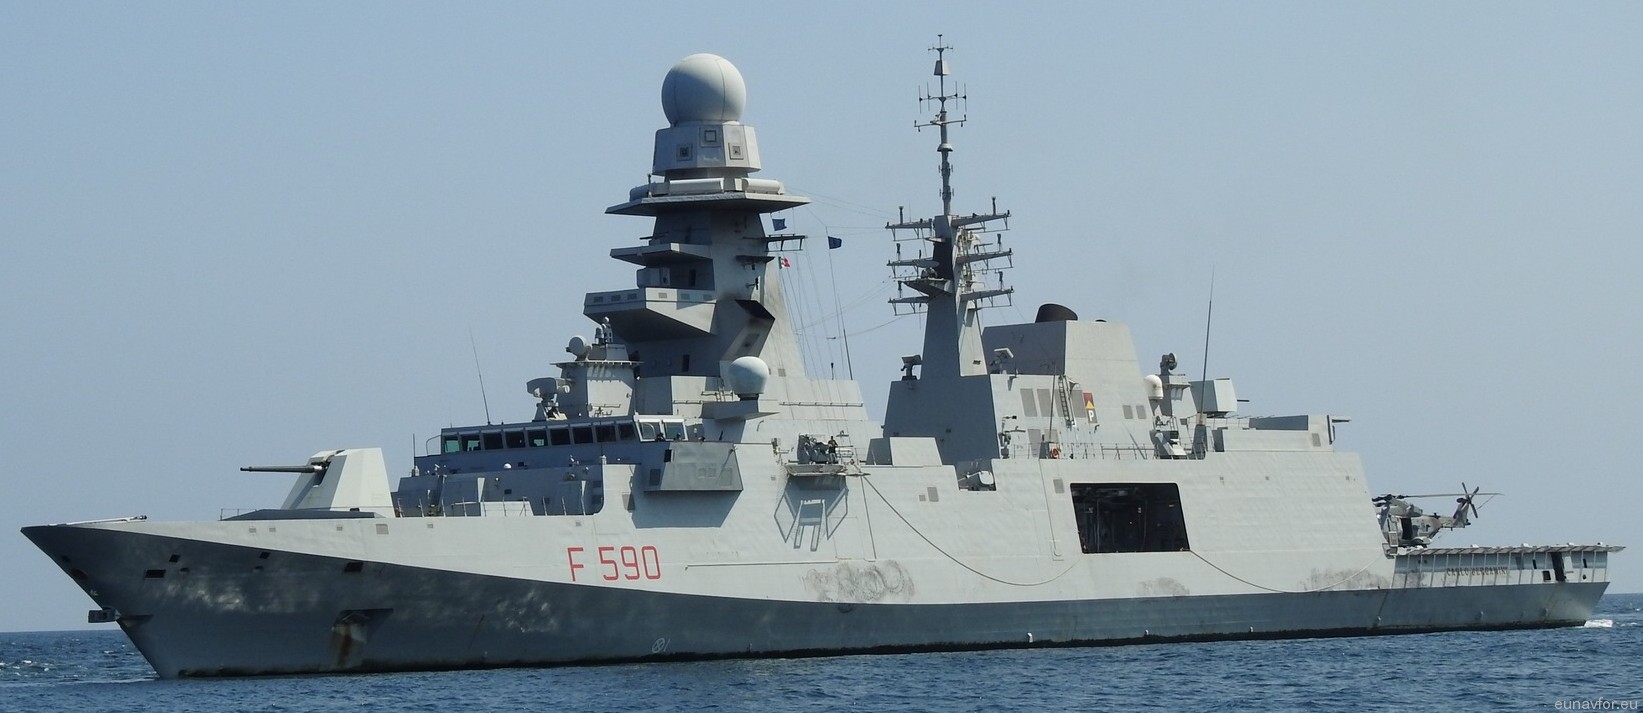 f-590 carlo bergamini its nave fremm class guided missile frigate italian navy marina militare eunavfor 48